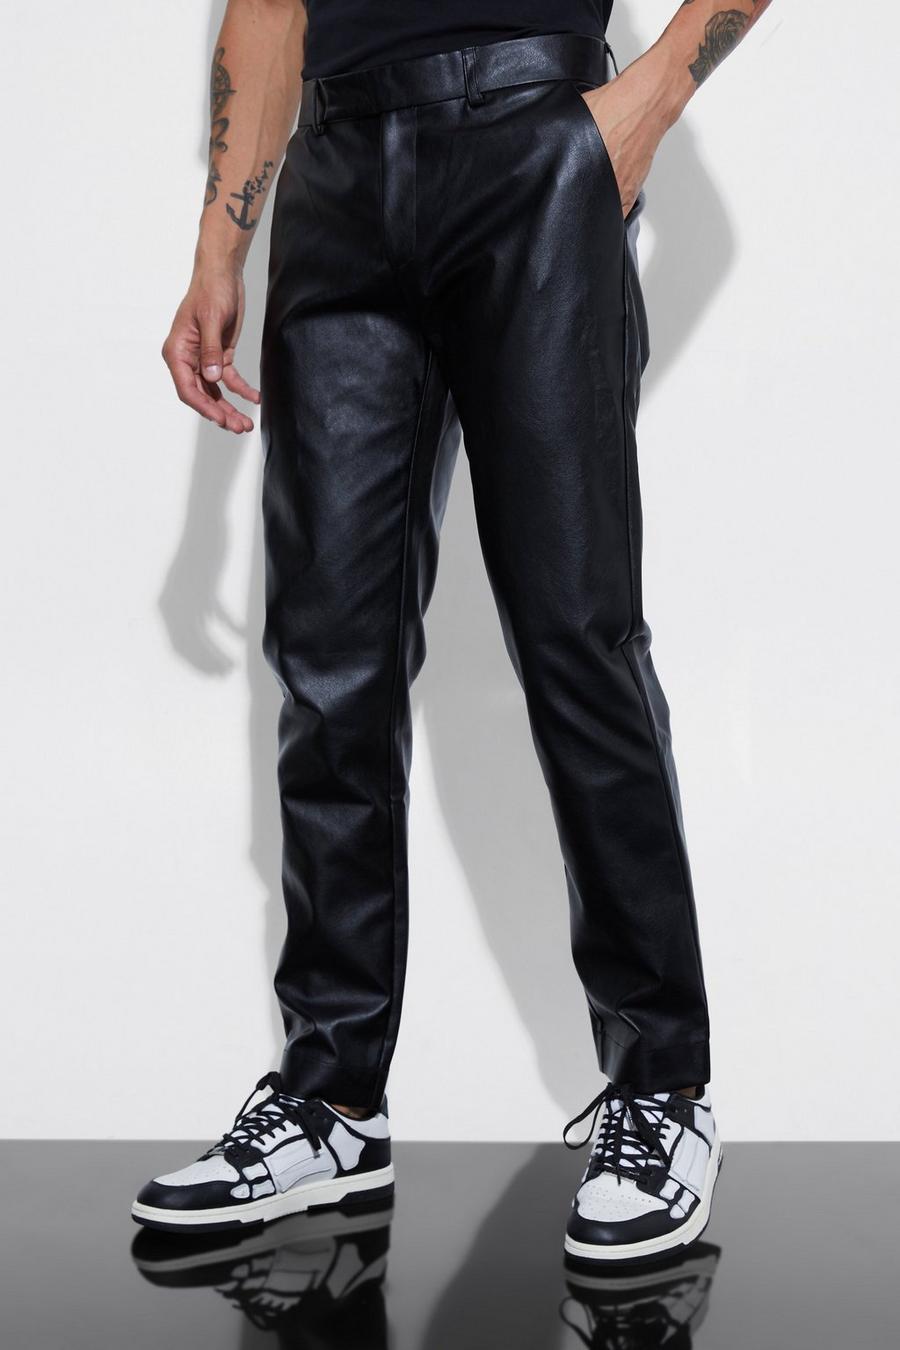 Pantaloni Slim Fit in PU, Black nero